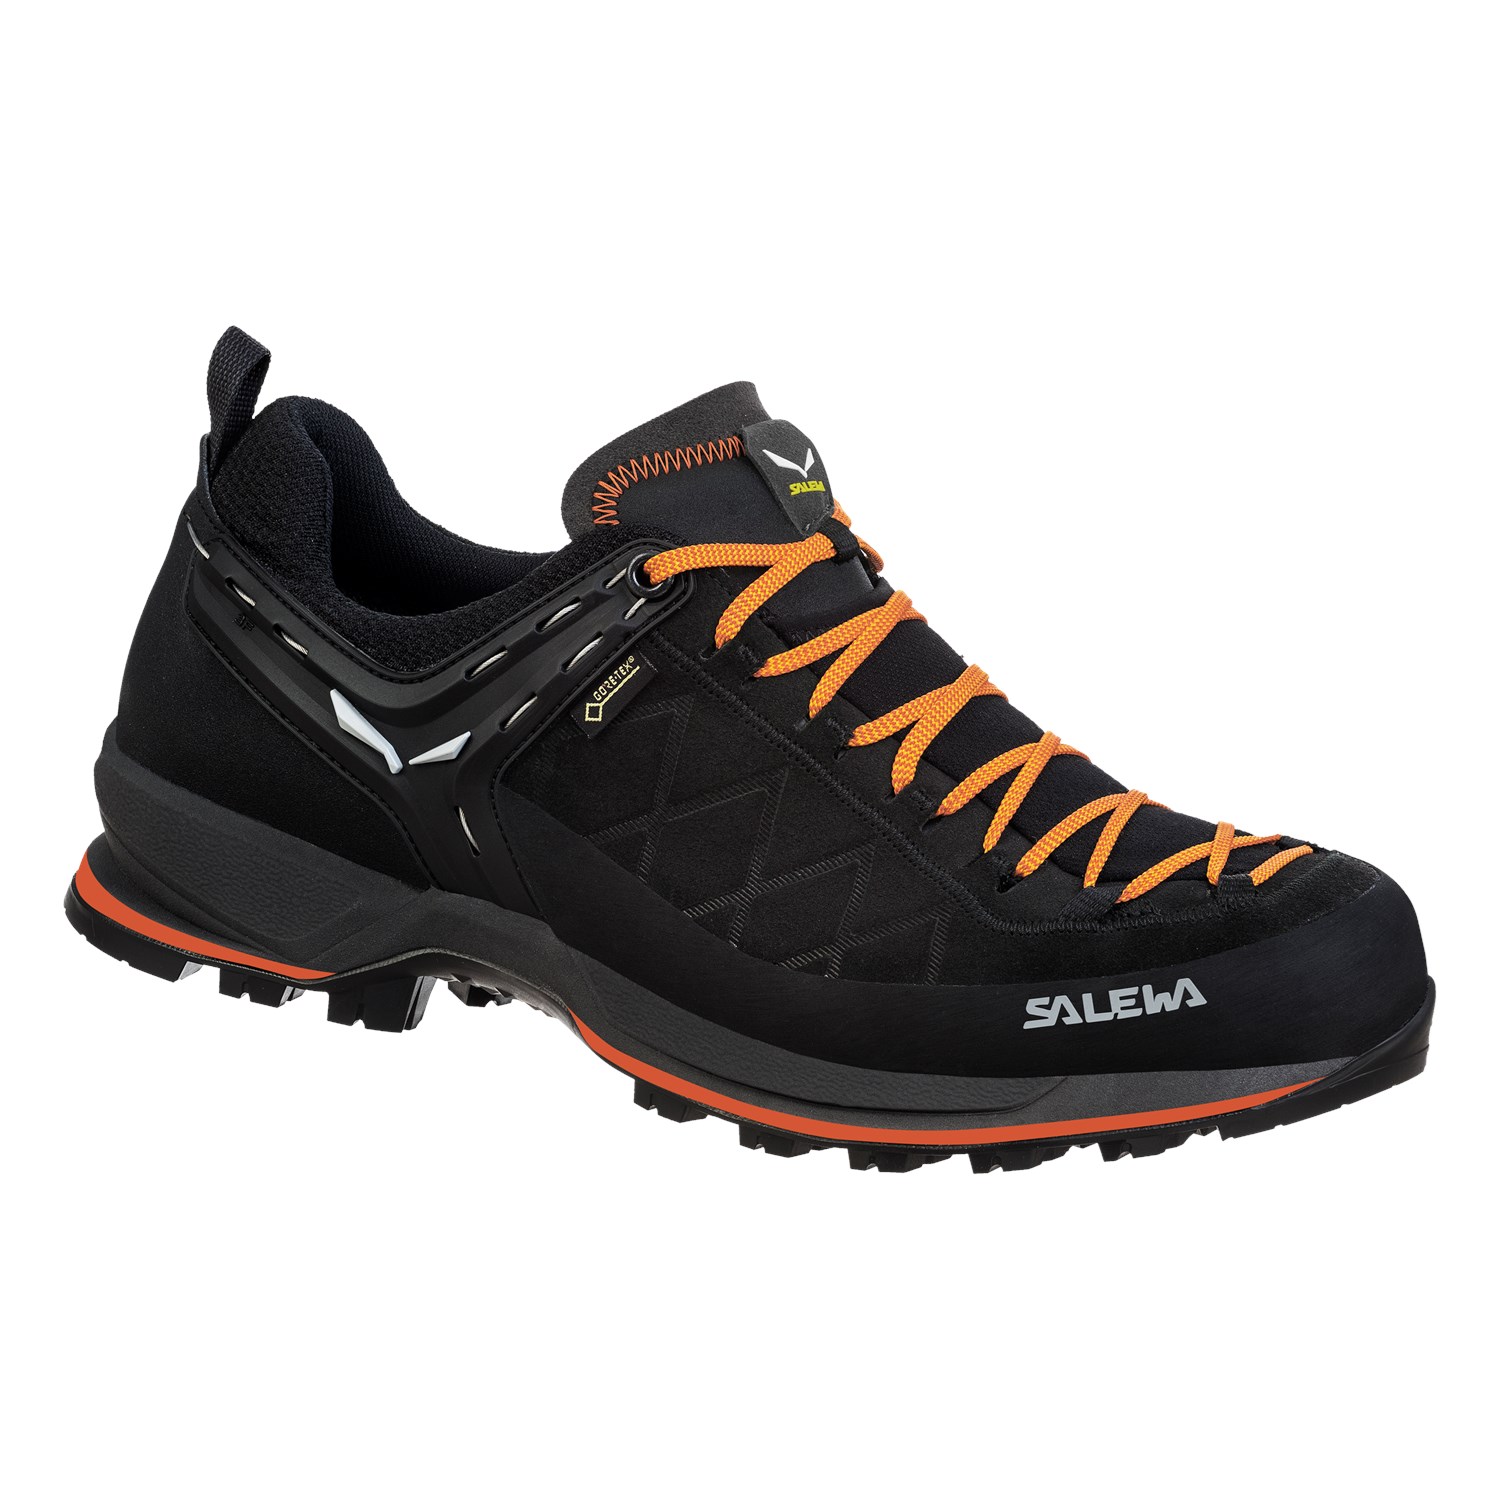  Salewa Men's Trekking & Hiking Boots, Black Out Carrot, 7